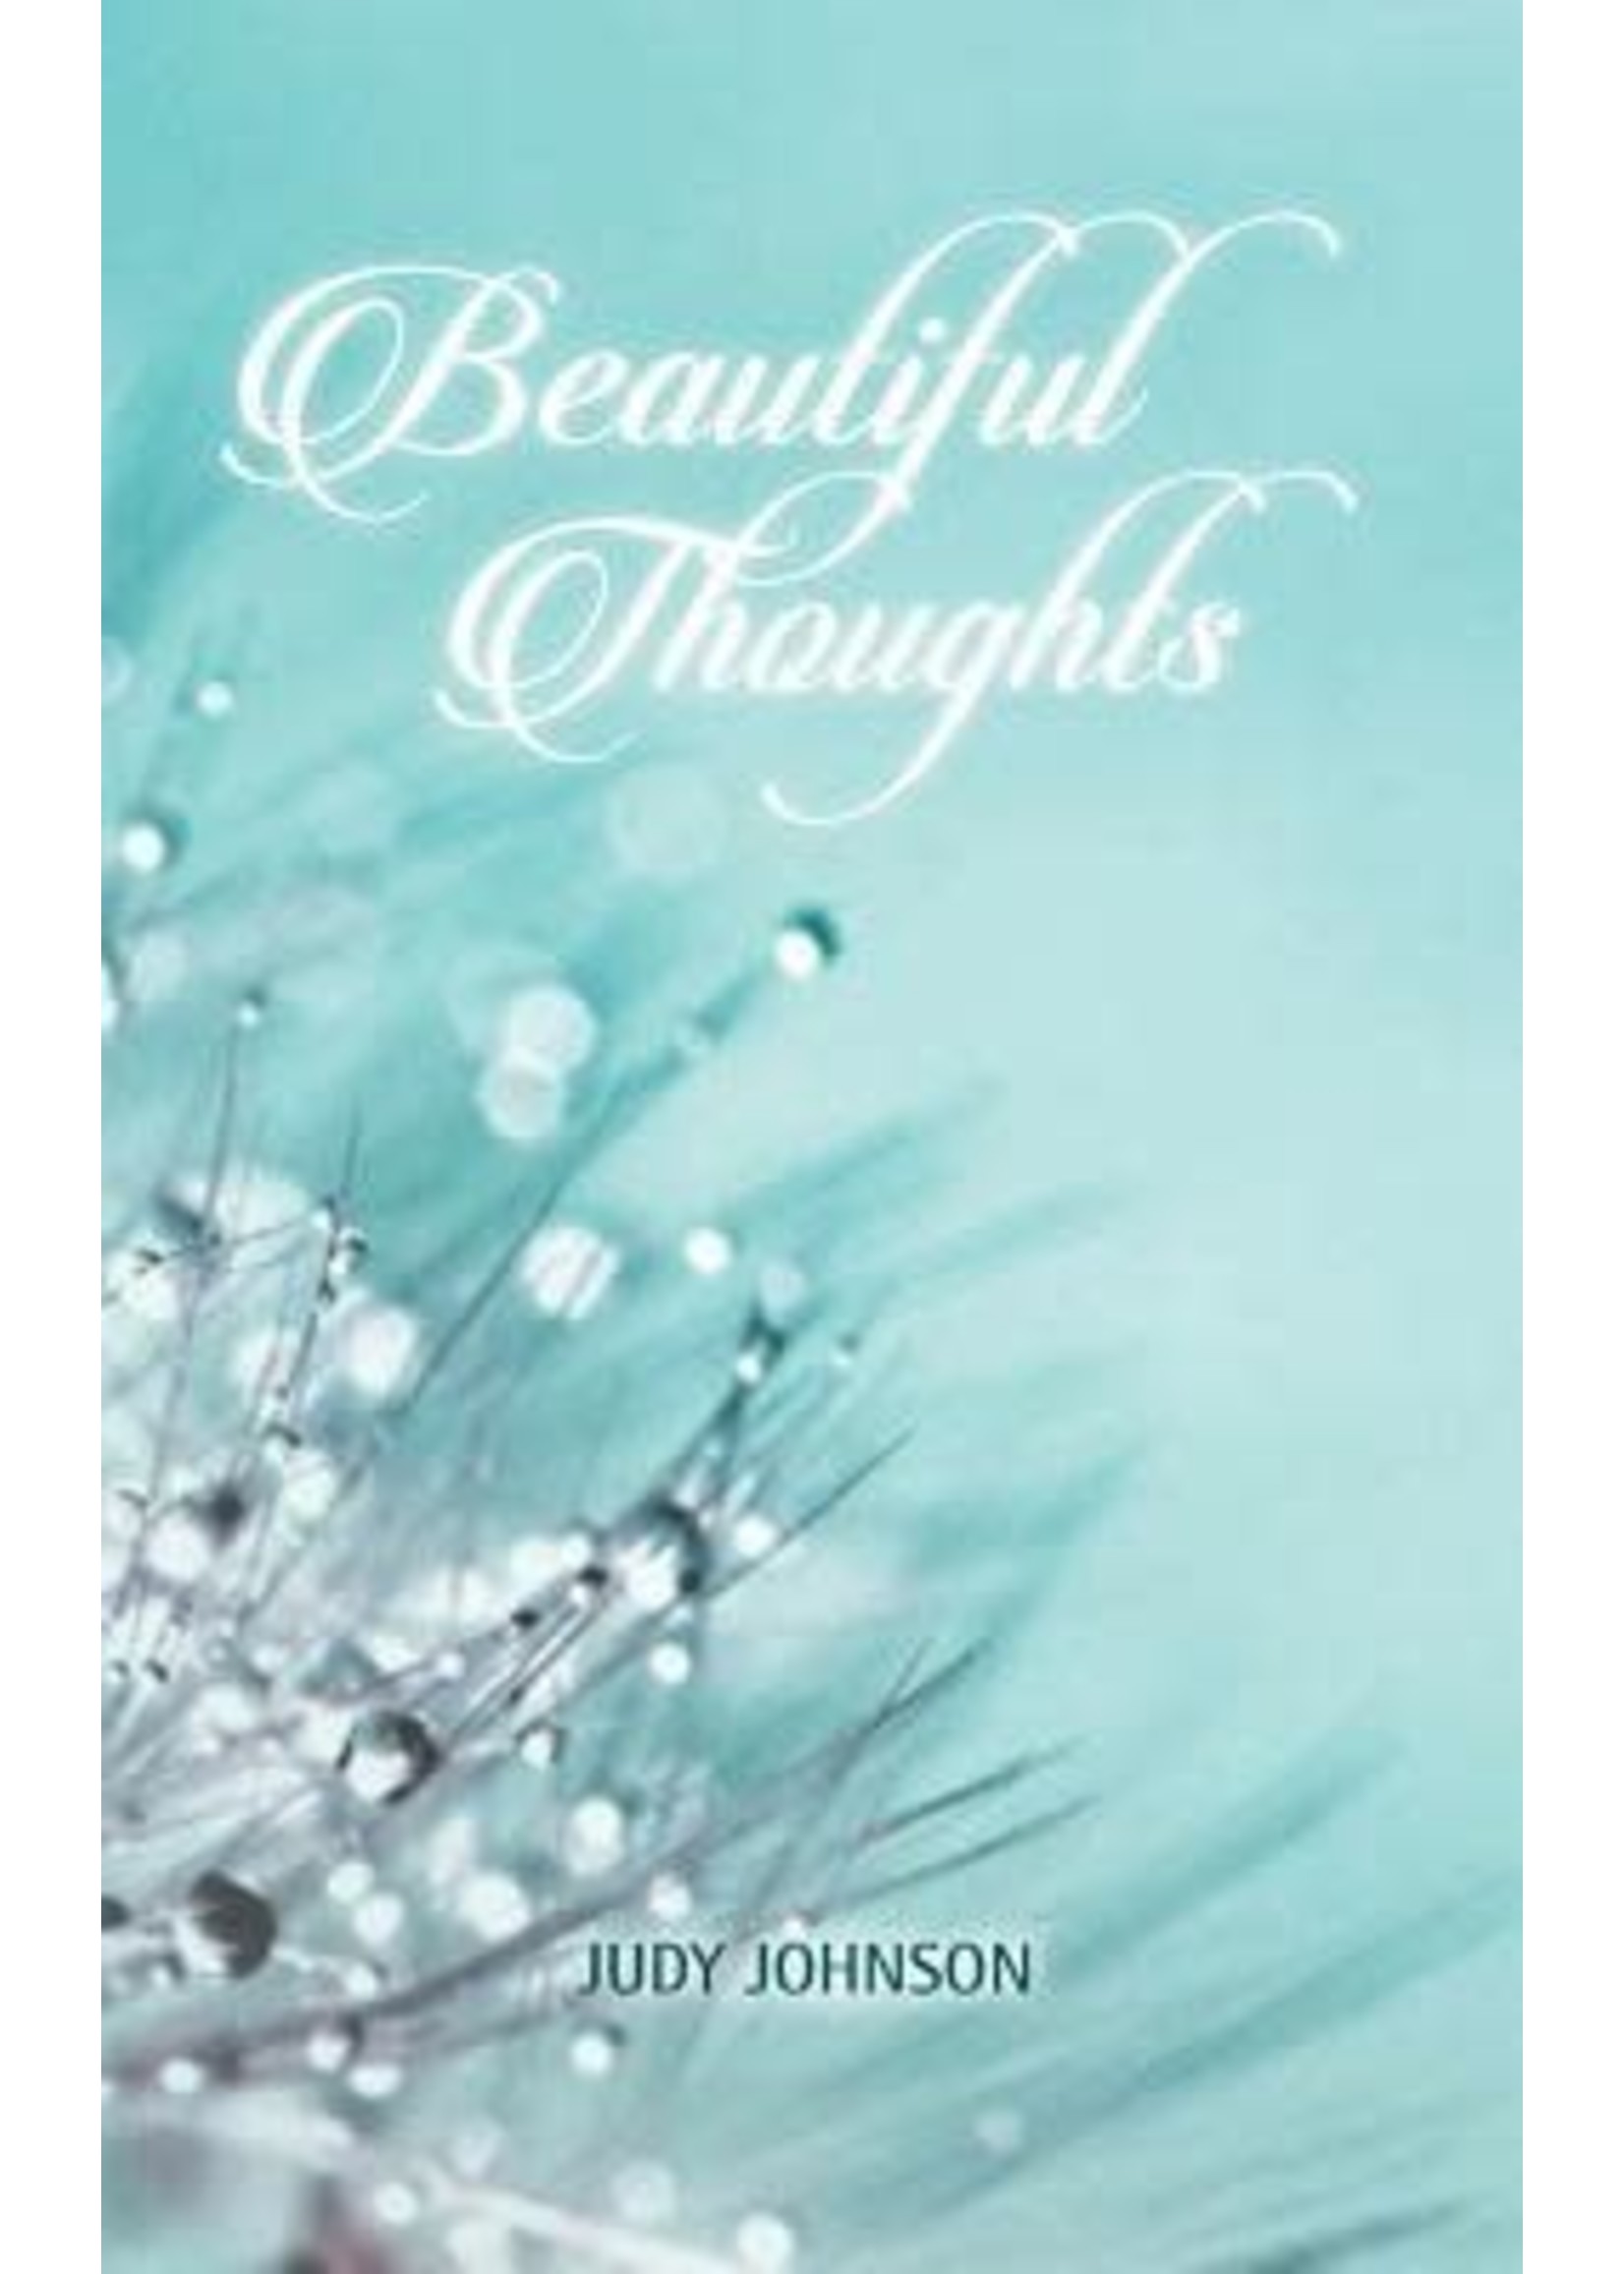 Beautiful Thoughts by Judy Johnson